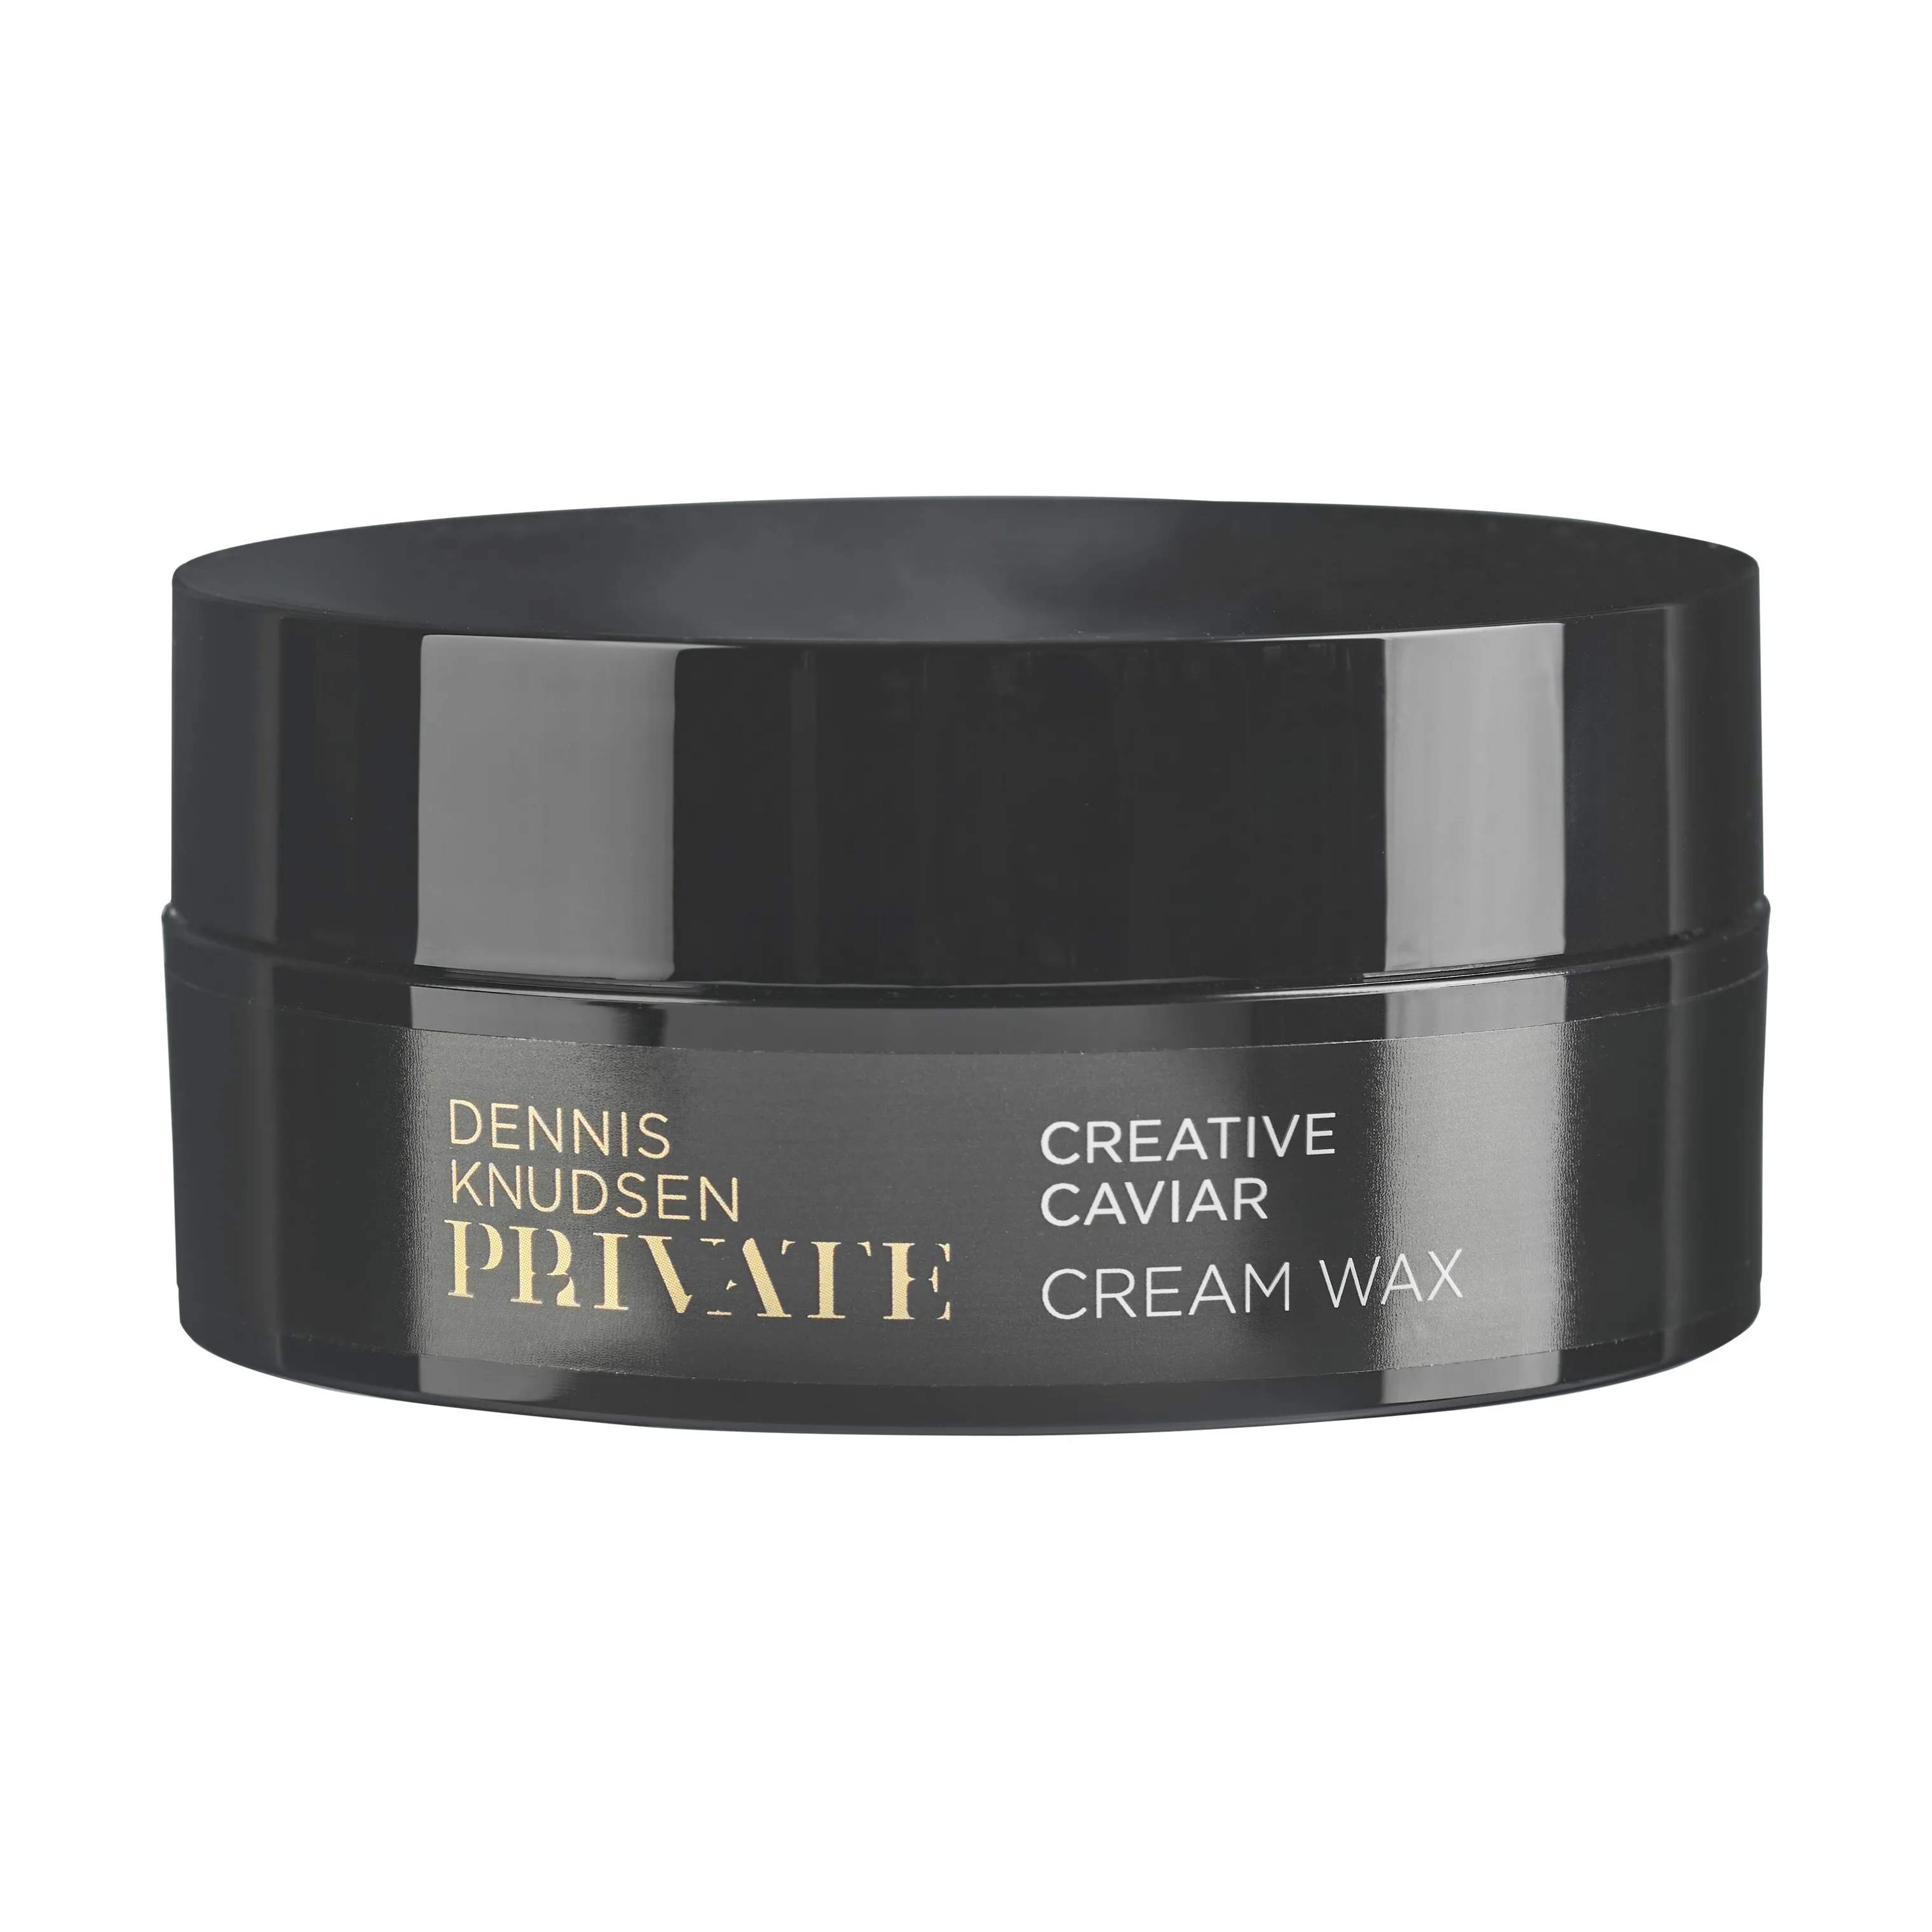 PRIVATE Creative Caviar Cream Wax, sort, large